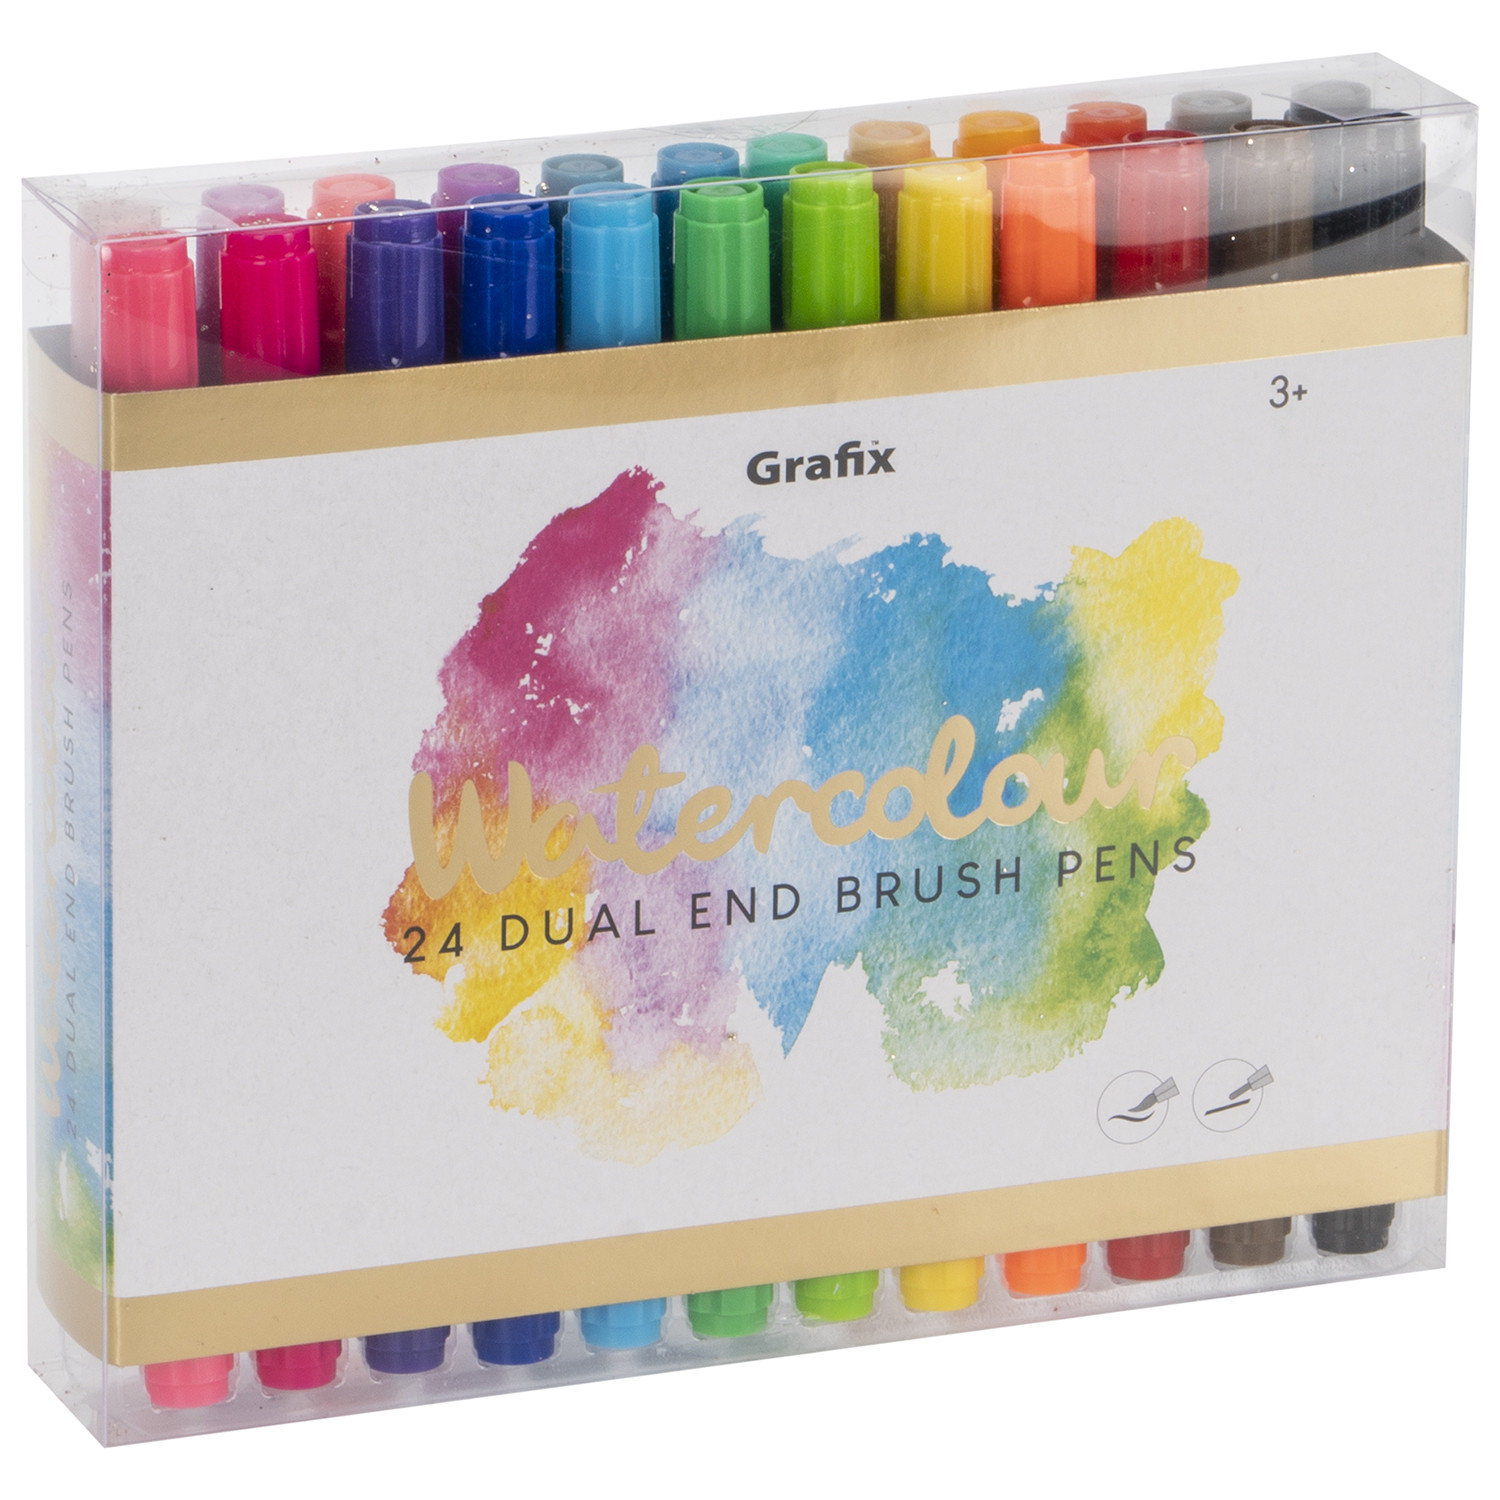 Grafix Dual Watercolour Brush Pens 24 Pack Image